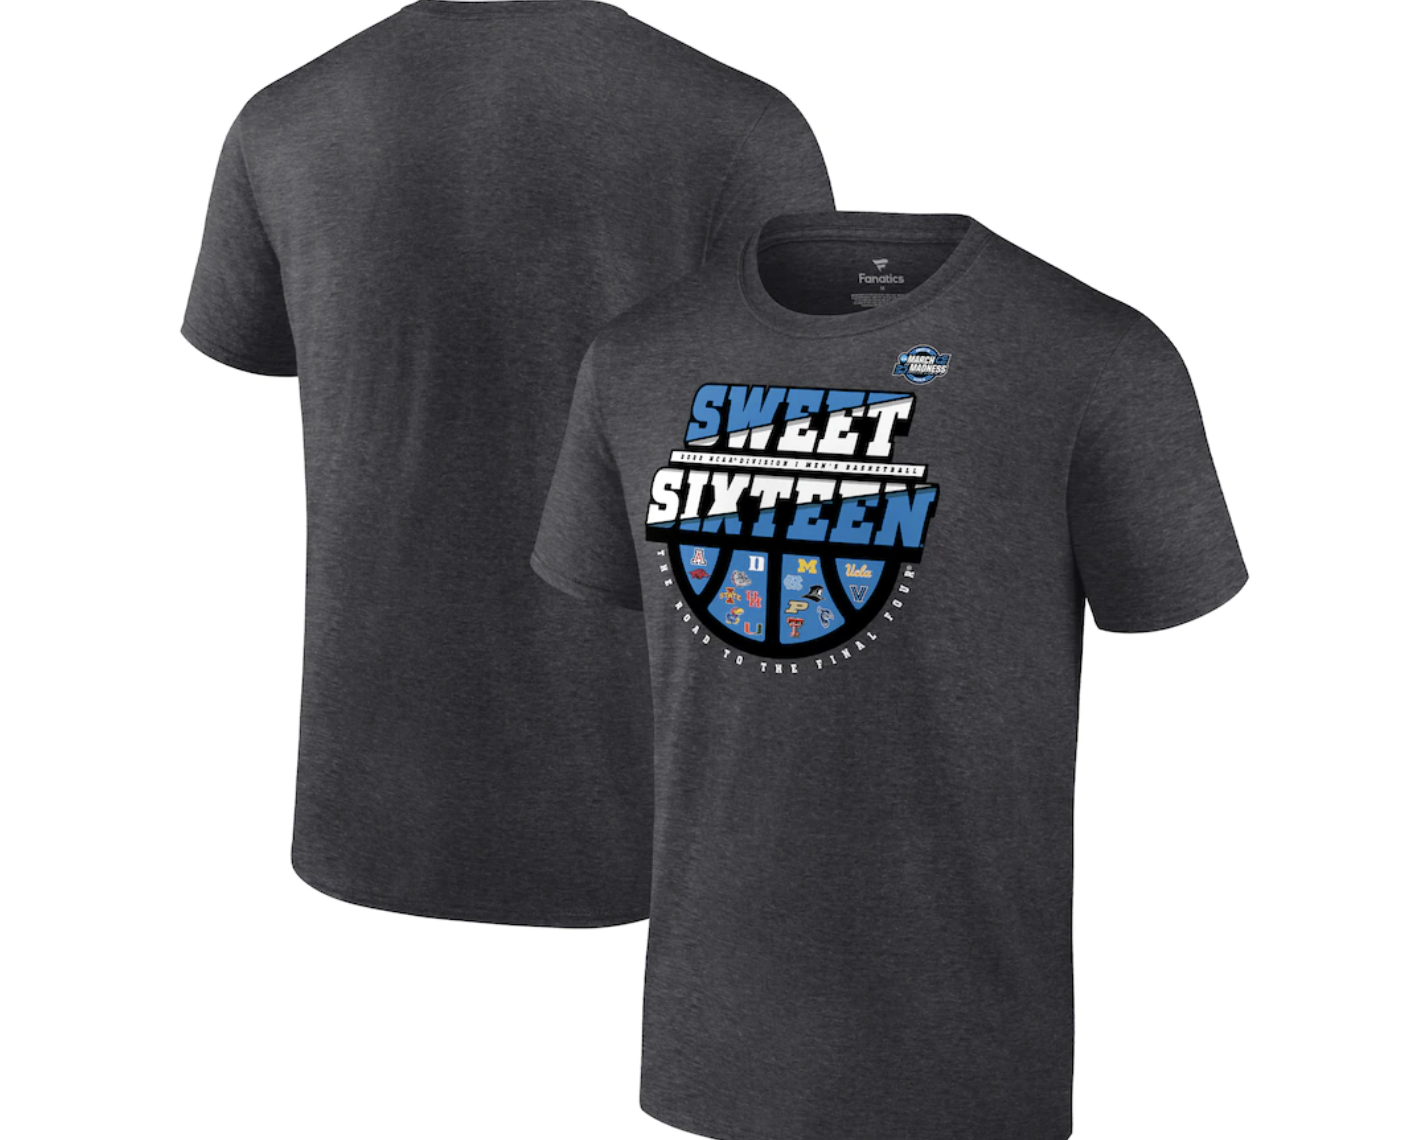 unisex shirt comfortable tees with Francis logo NCAA Basketball team t-shirt